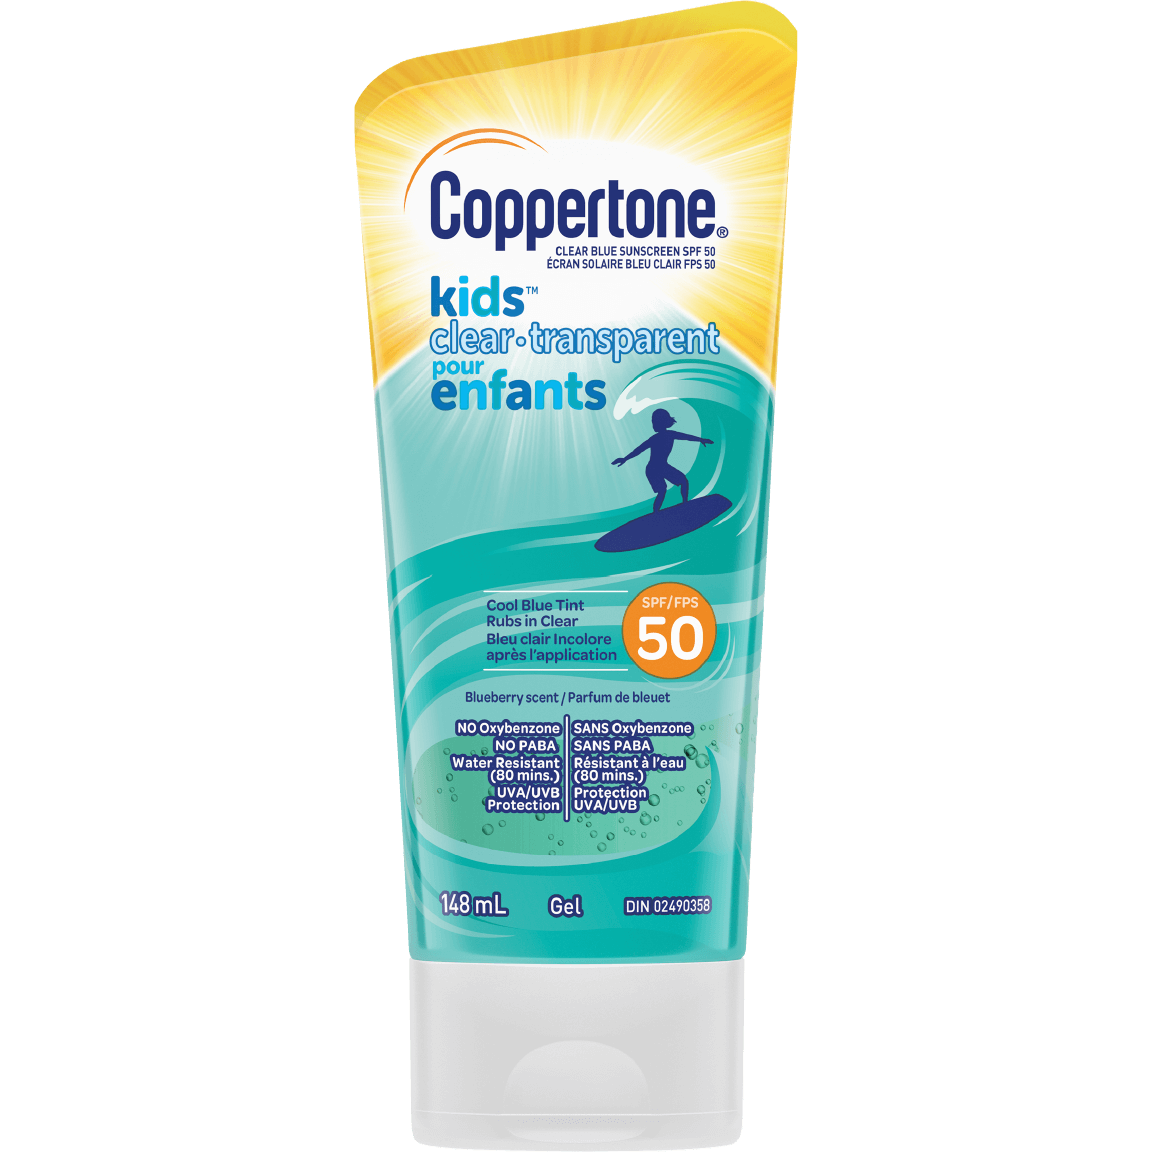 Coppertone Kids Clear Sunscreen Gel SPF 50